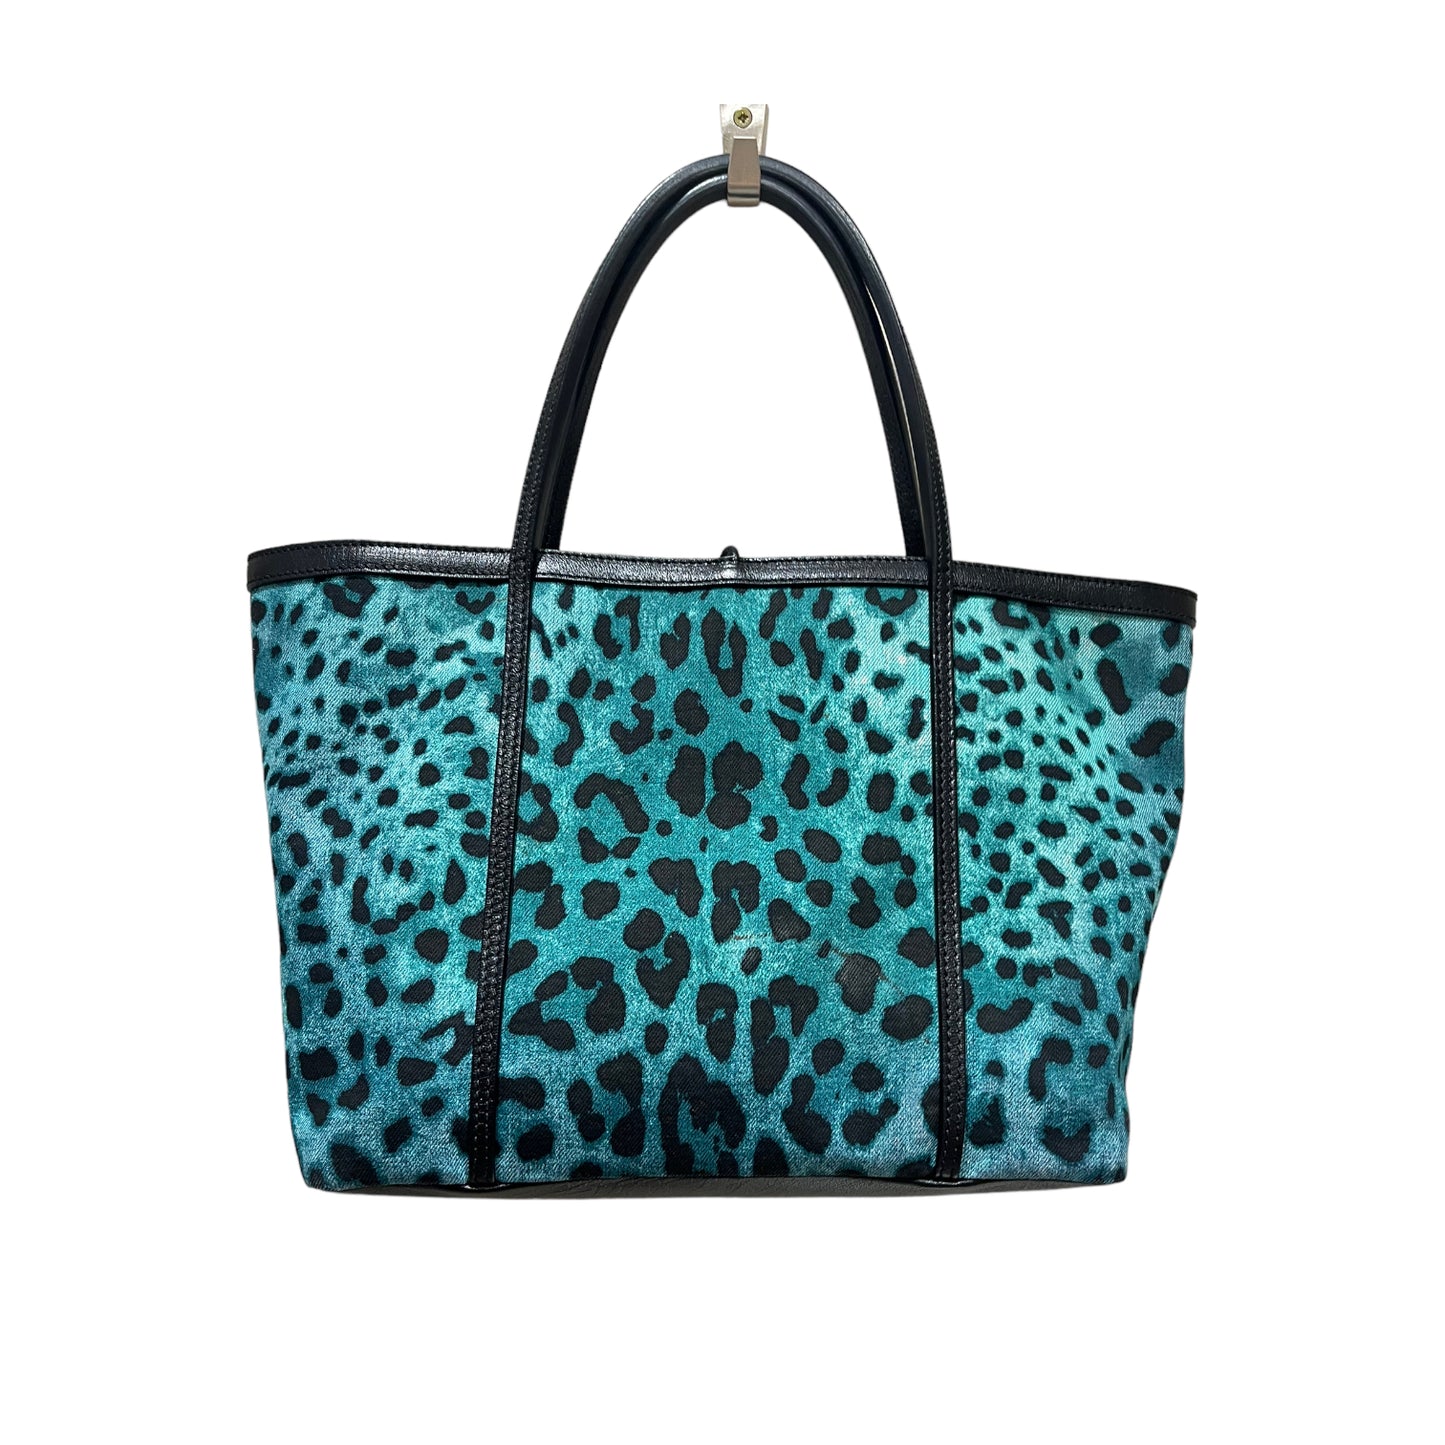 Dolce and Gabbana Blue Animal Print Tote Bag